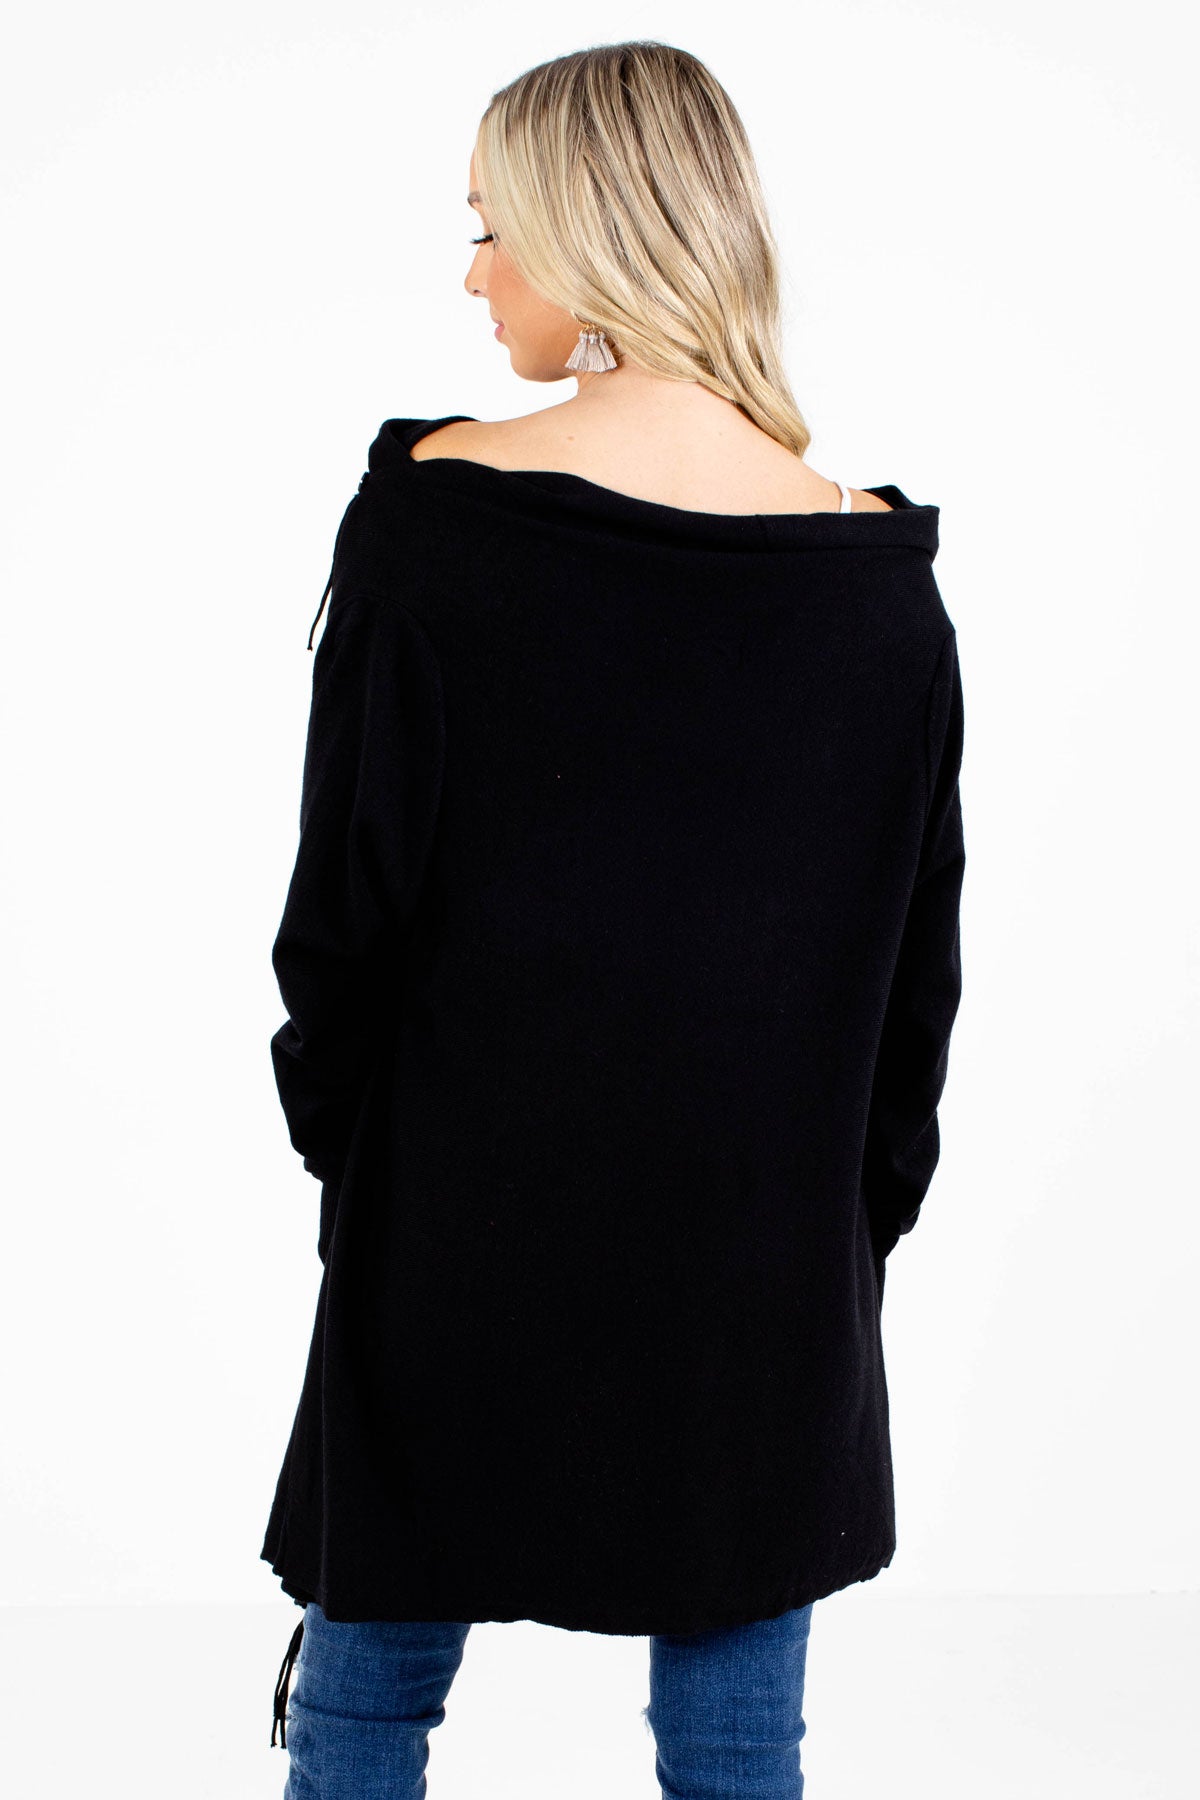 Women's Black Long Sleeve Boutique Cardigan